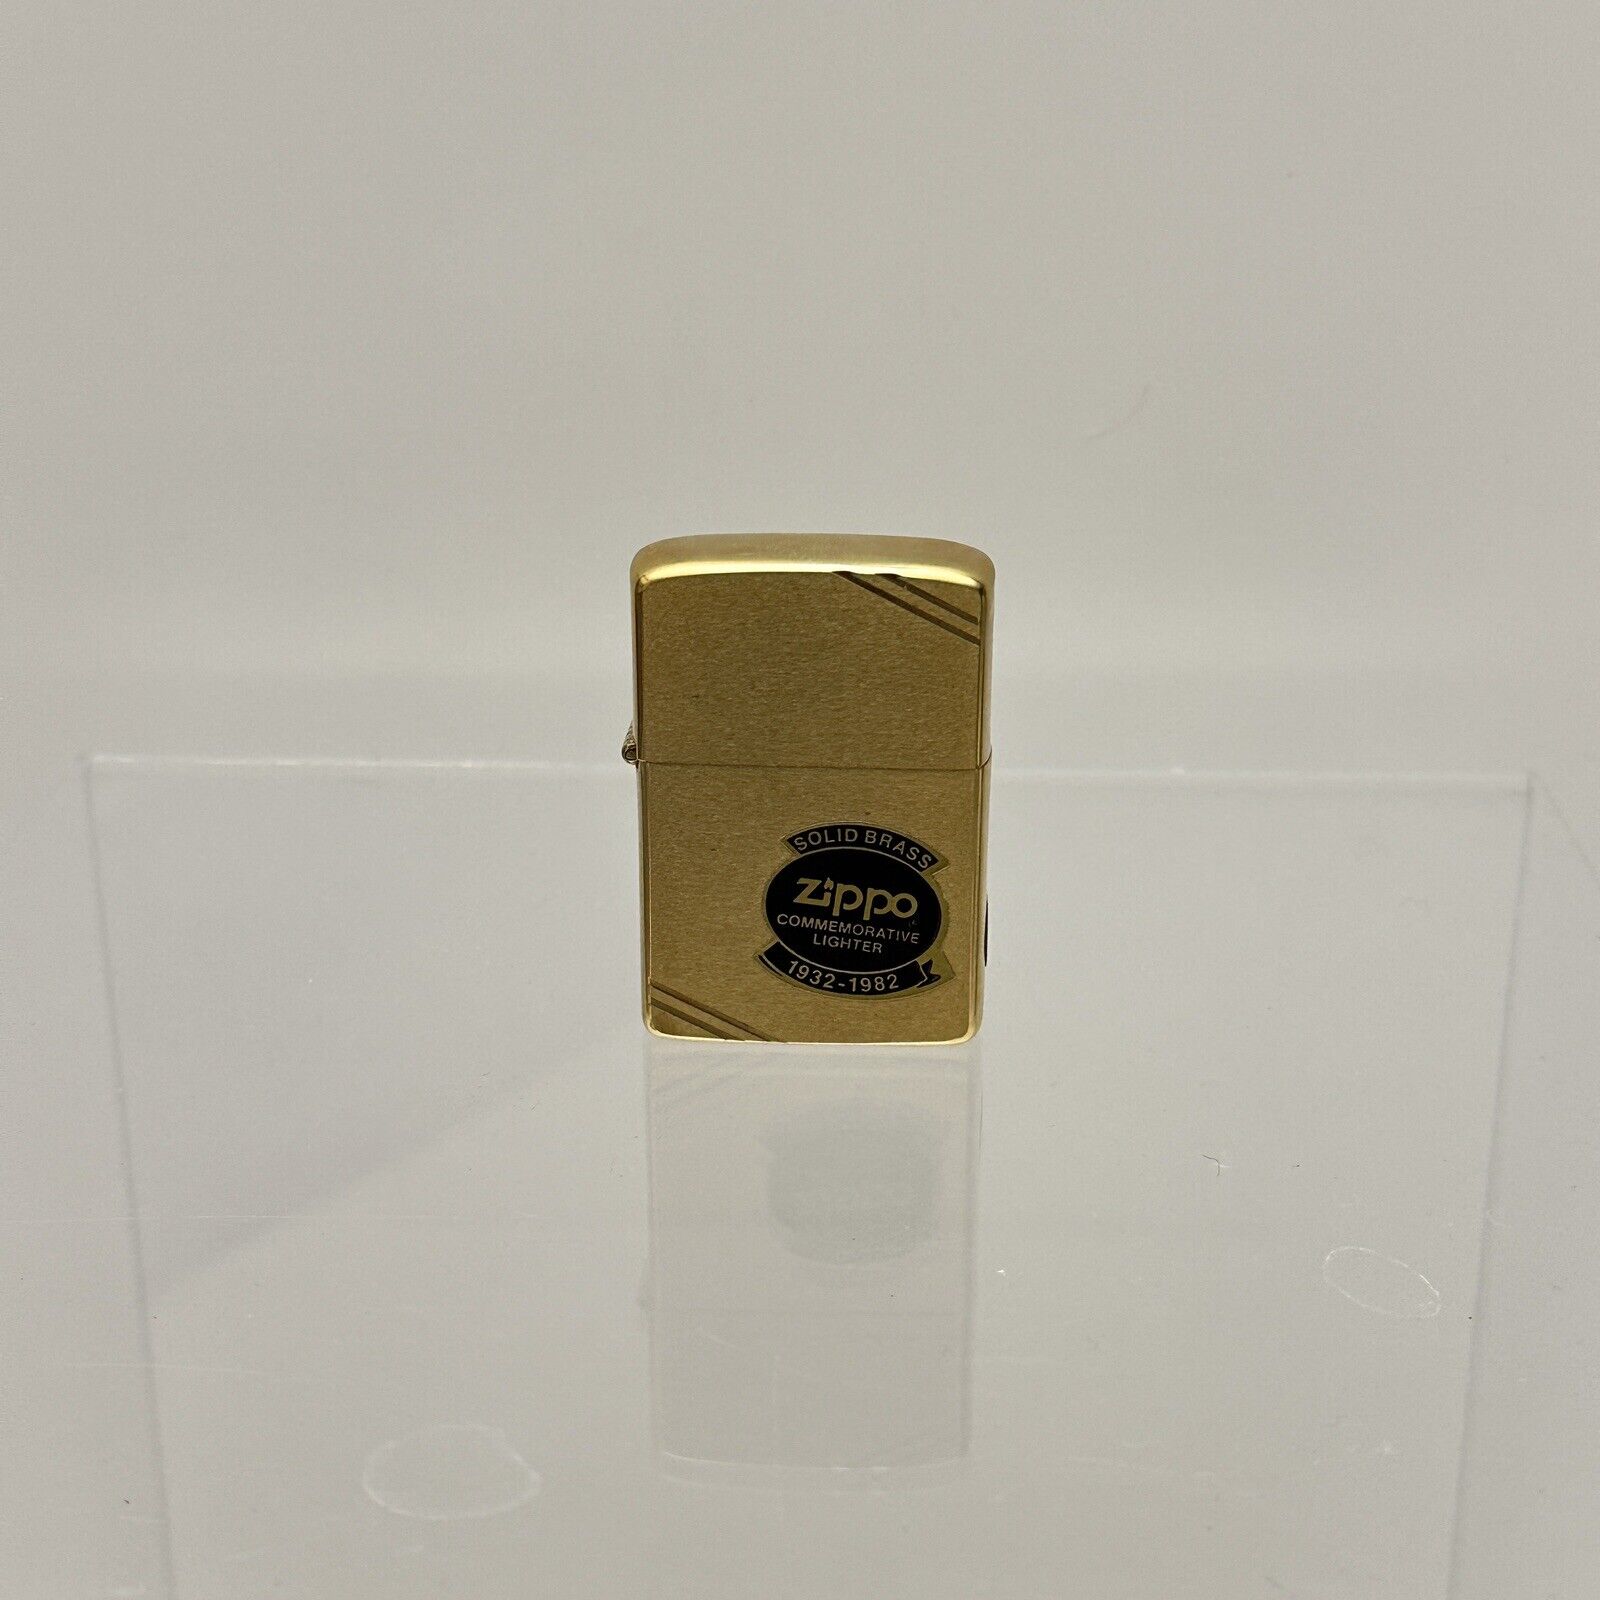 Vintage Brass Commemorative Zippo Lighter 1932-1982